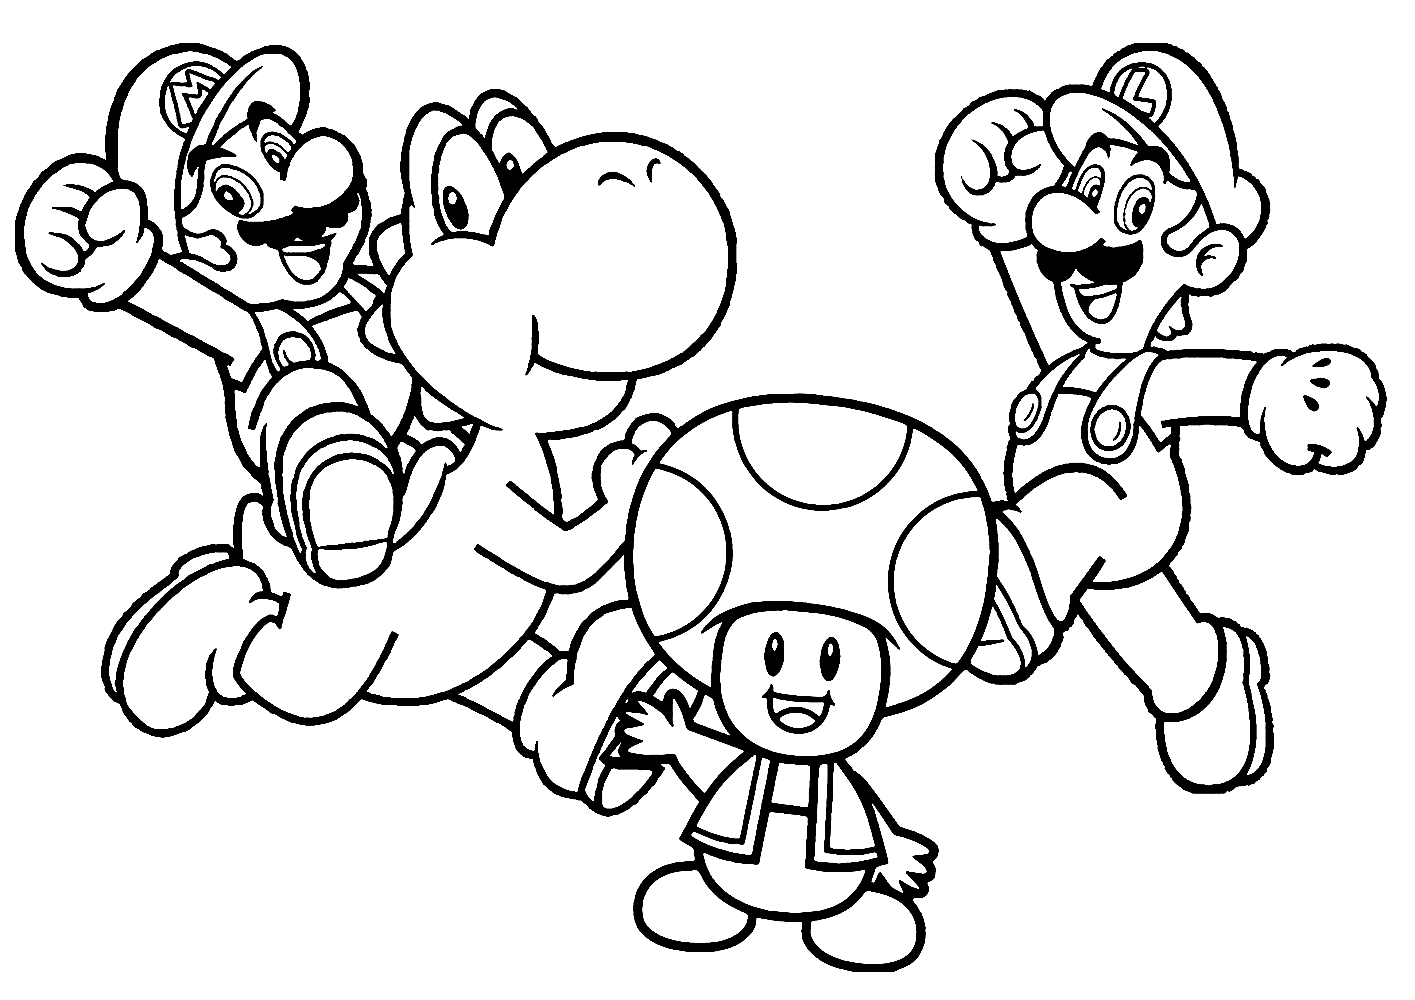 Super Mario Coloring Pages: Mario Brothers (2020)